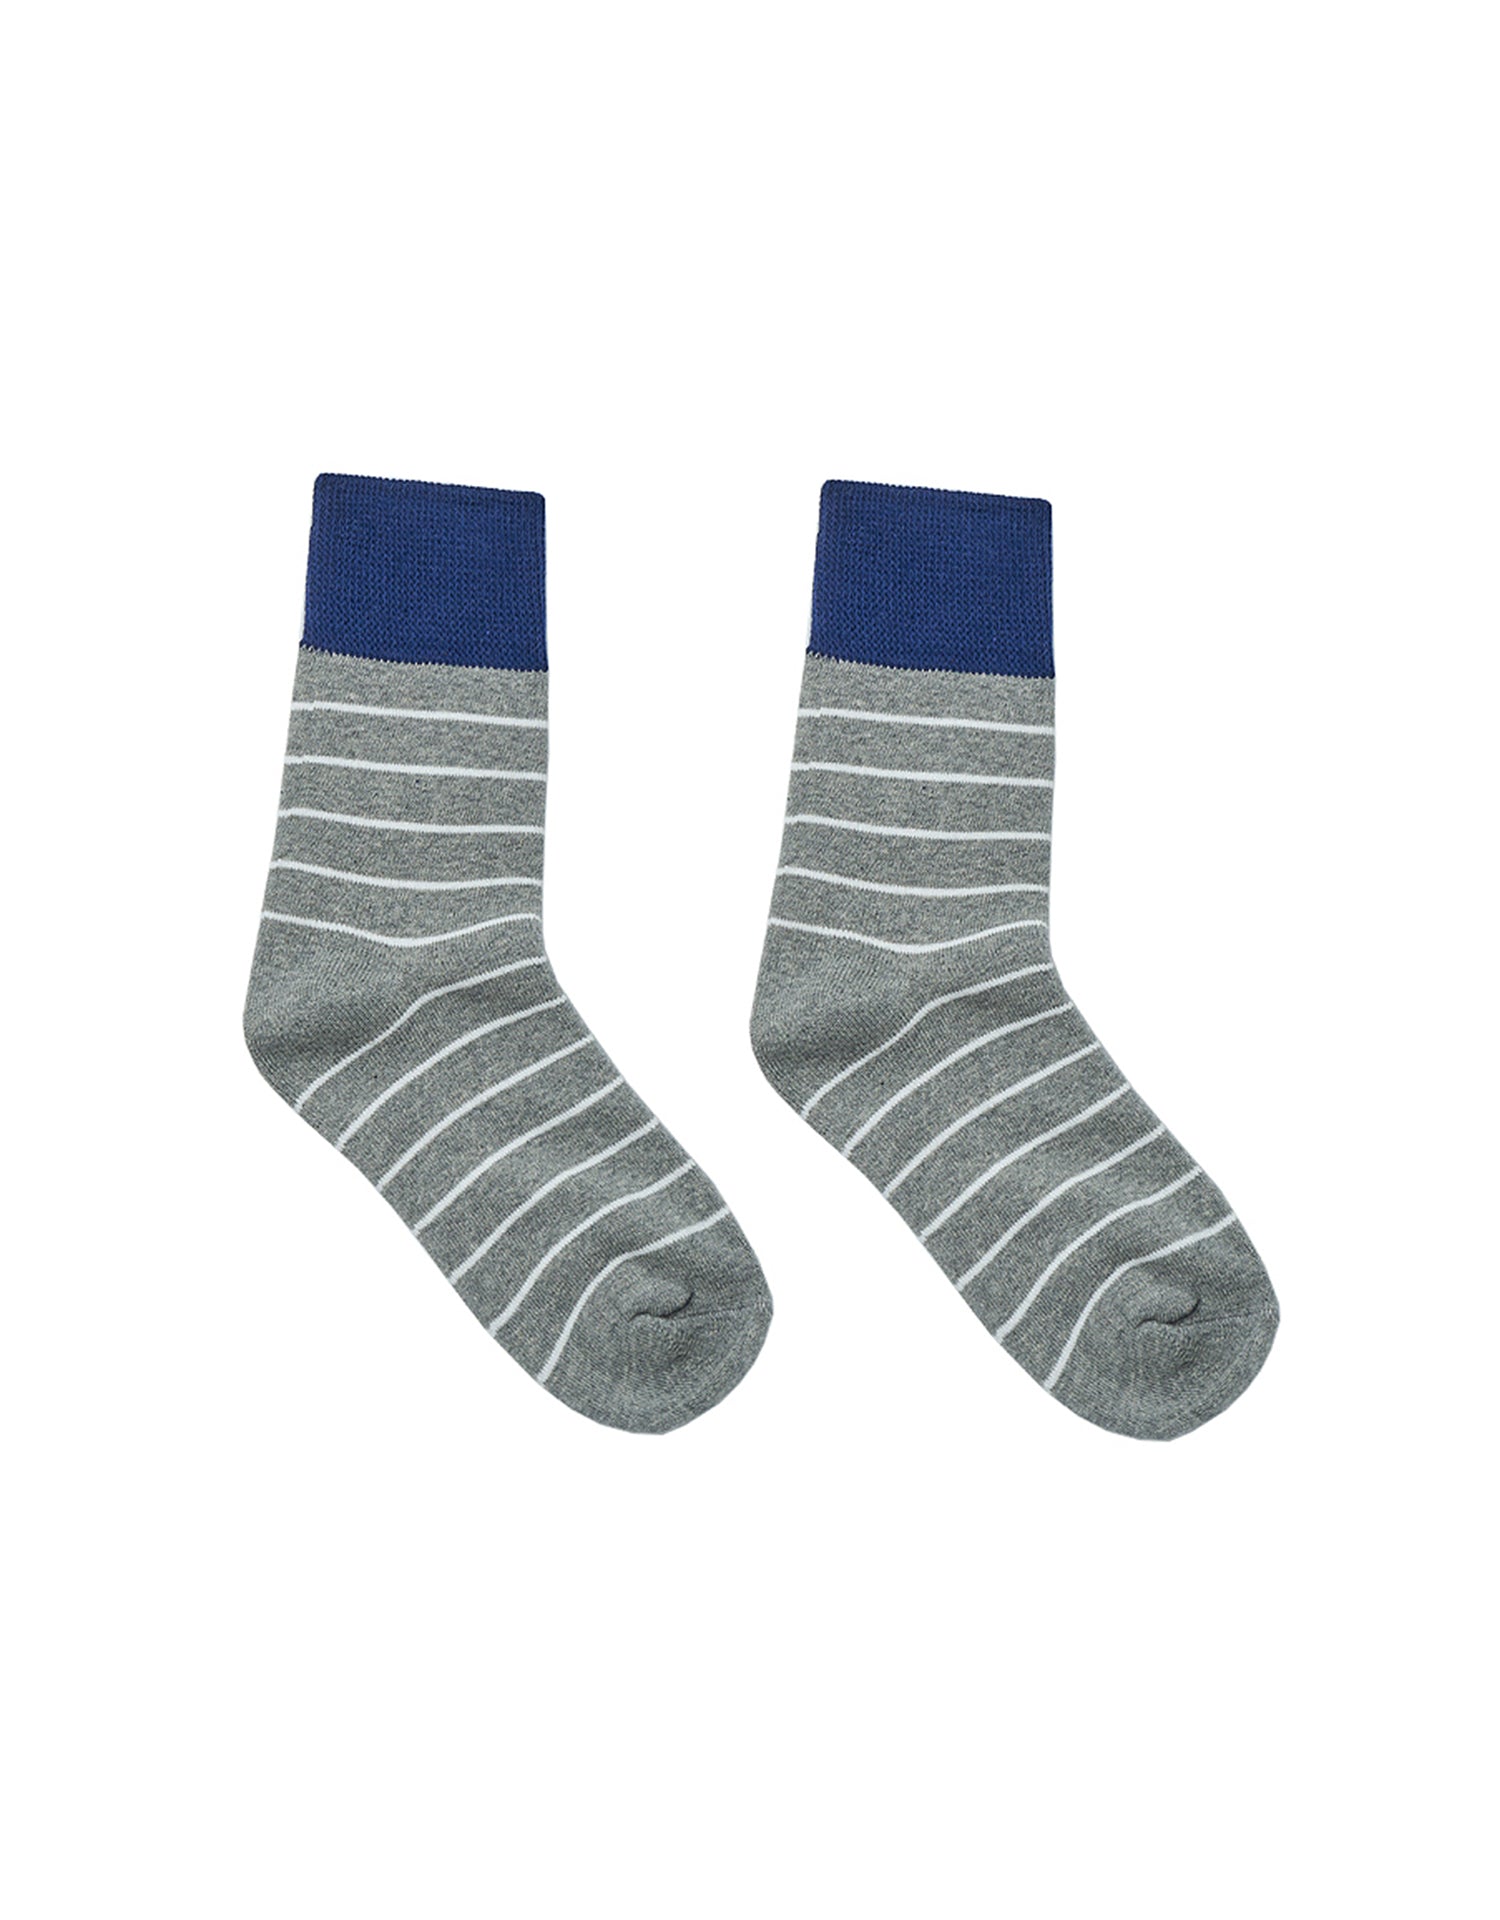 TopBasics Contrasted Striped Socks